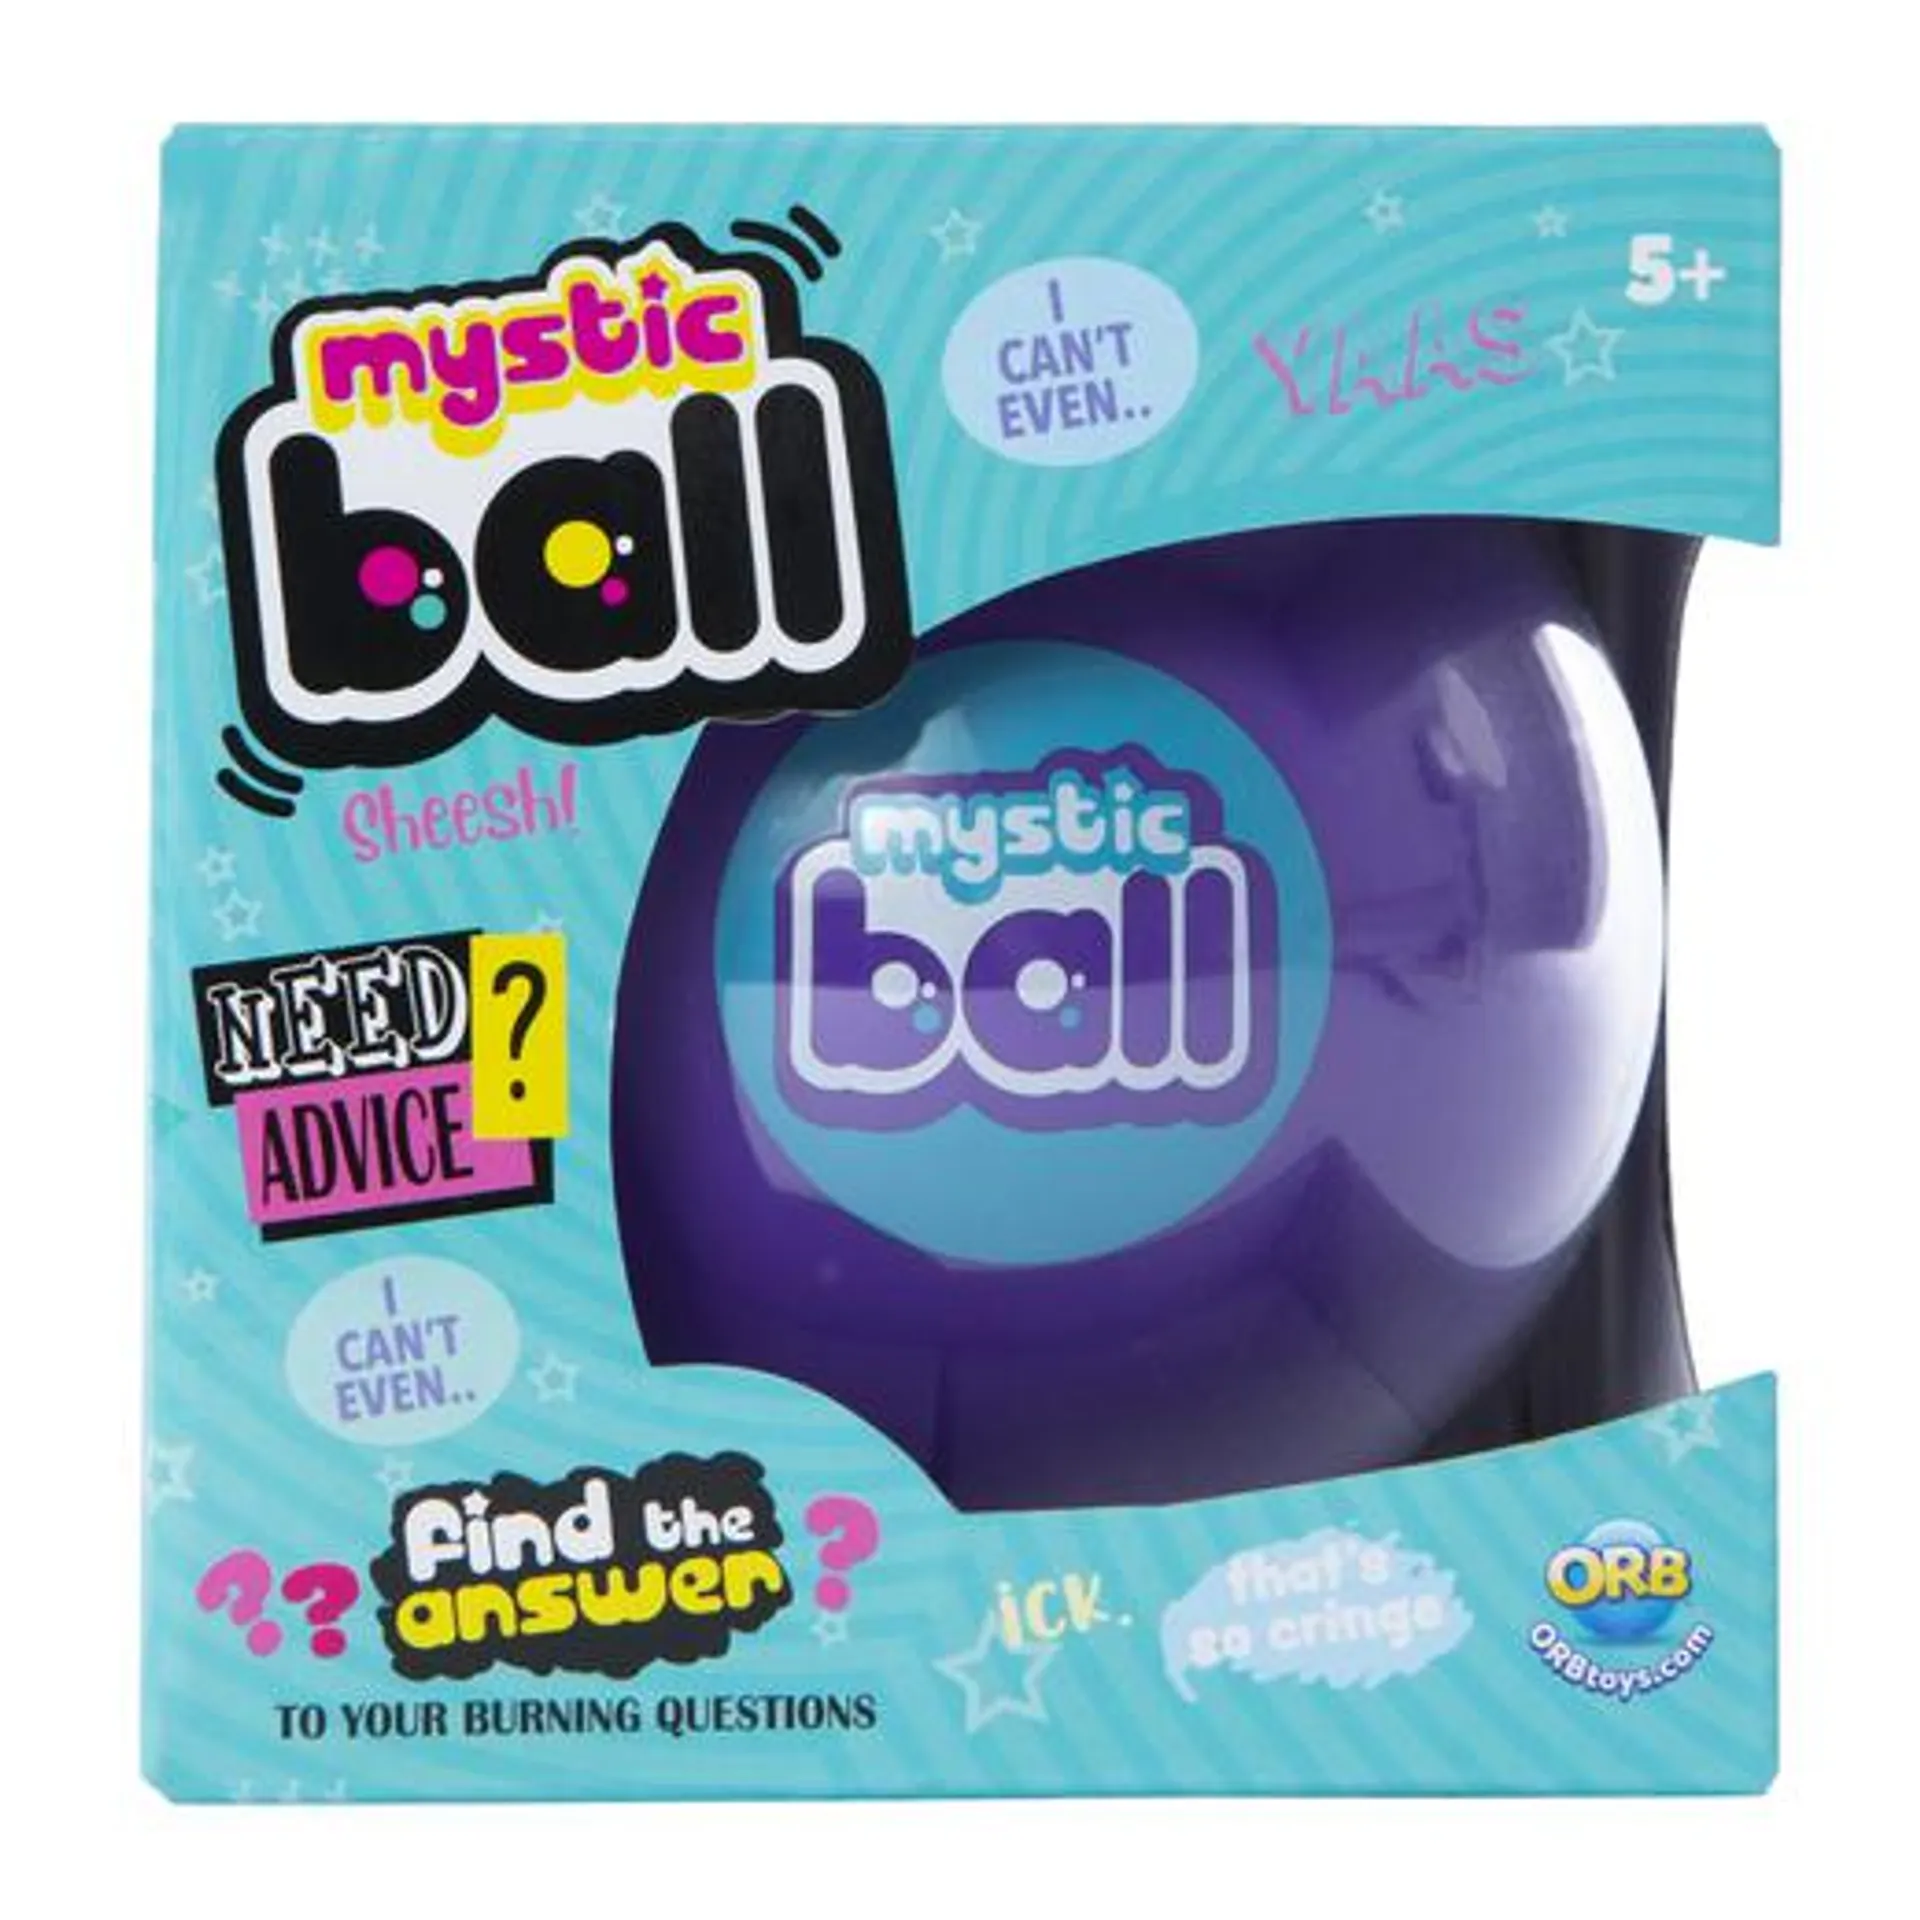 Mystic Ball Toy